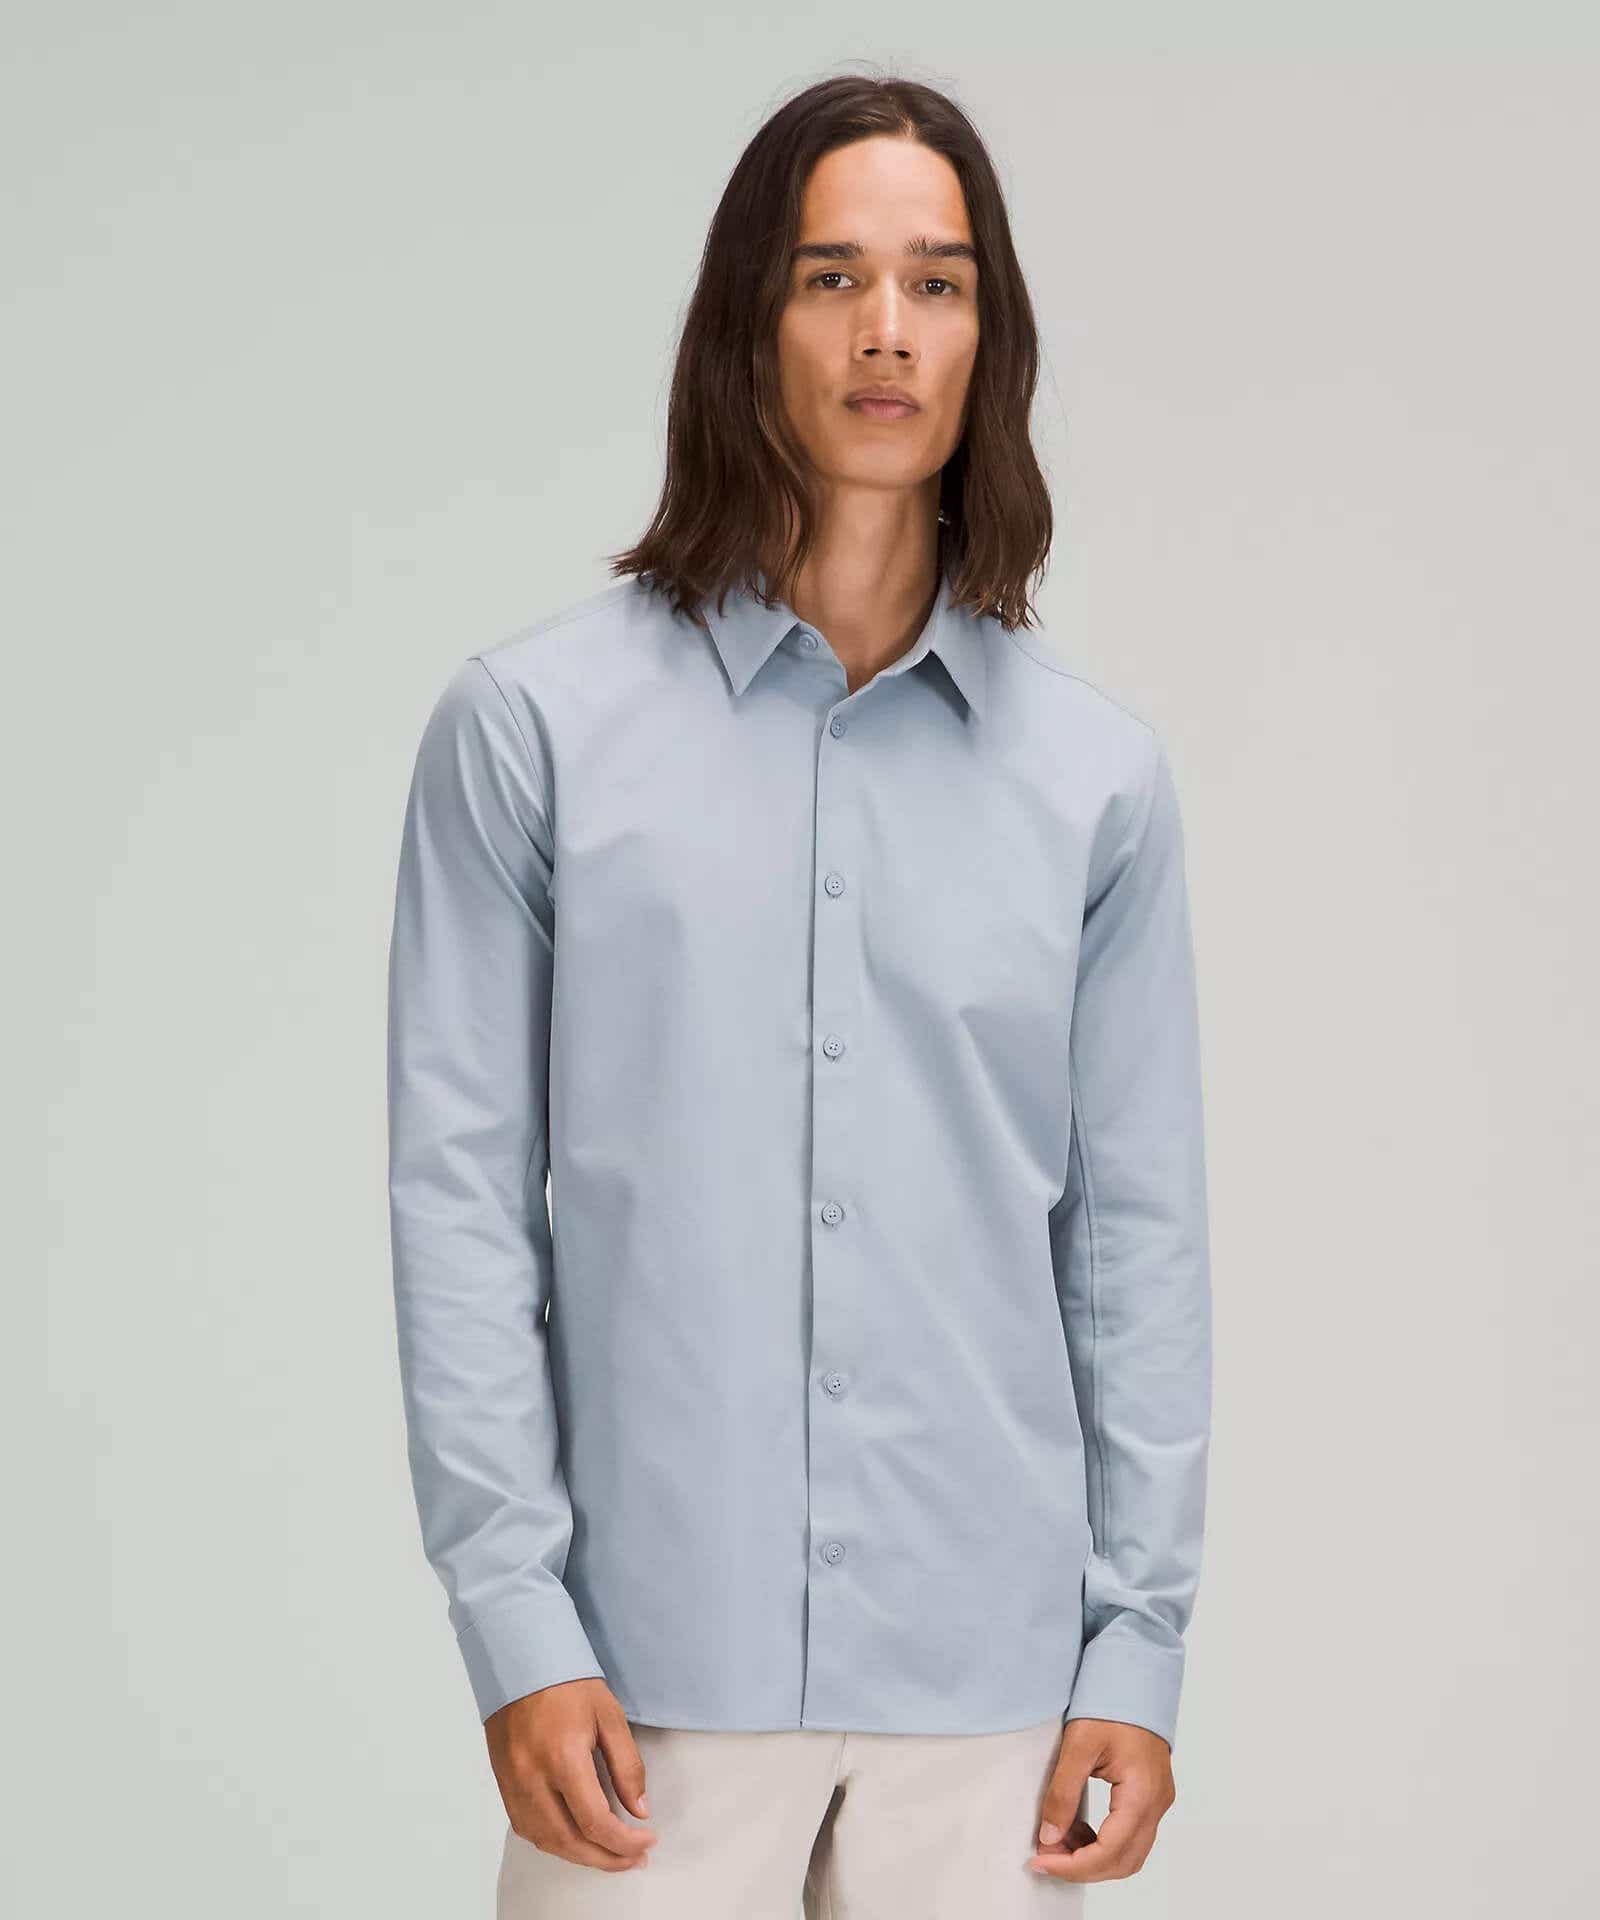 lululemon New Venture Long Sleeve Shirt